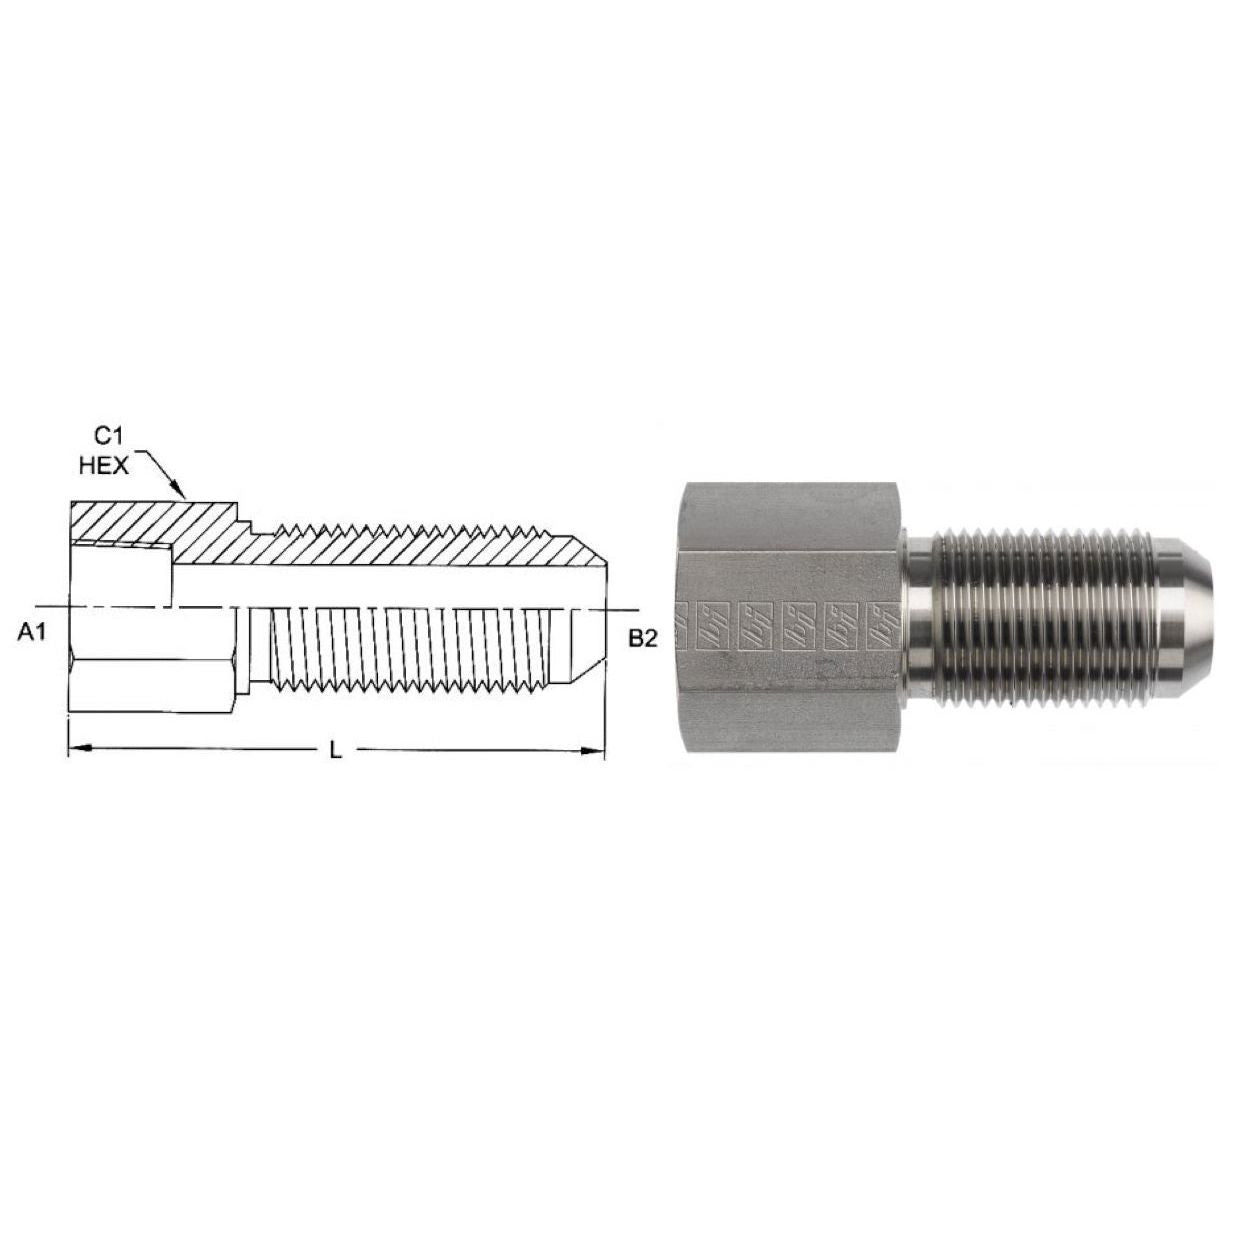 2705-08-08 : OneHydraulics Bulkhead Adapter, Straight, 0.5 (1/2") JIC JIC x 0.5 (1/2") Male, Steel, 5000psi